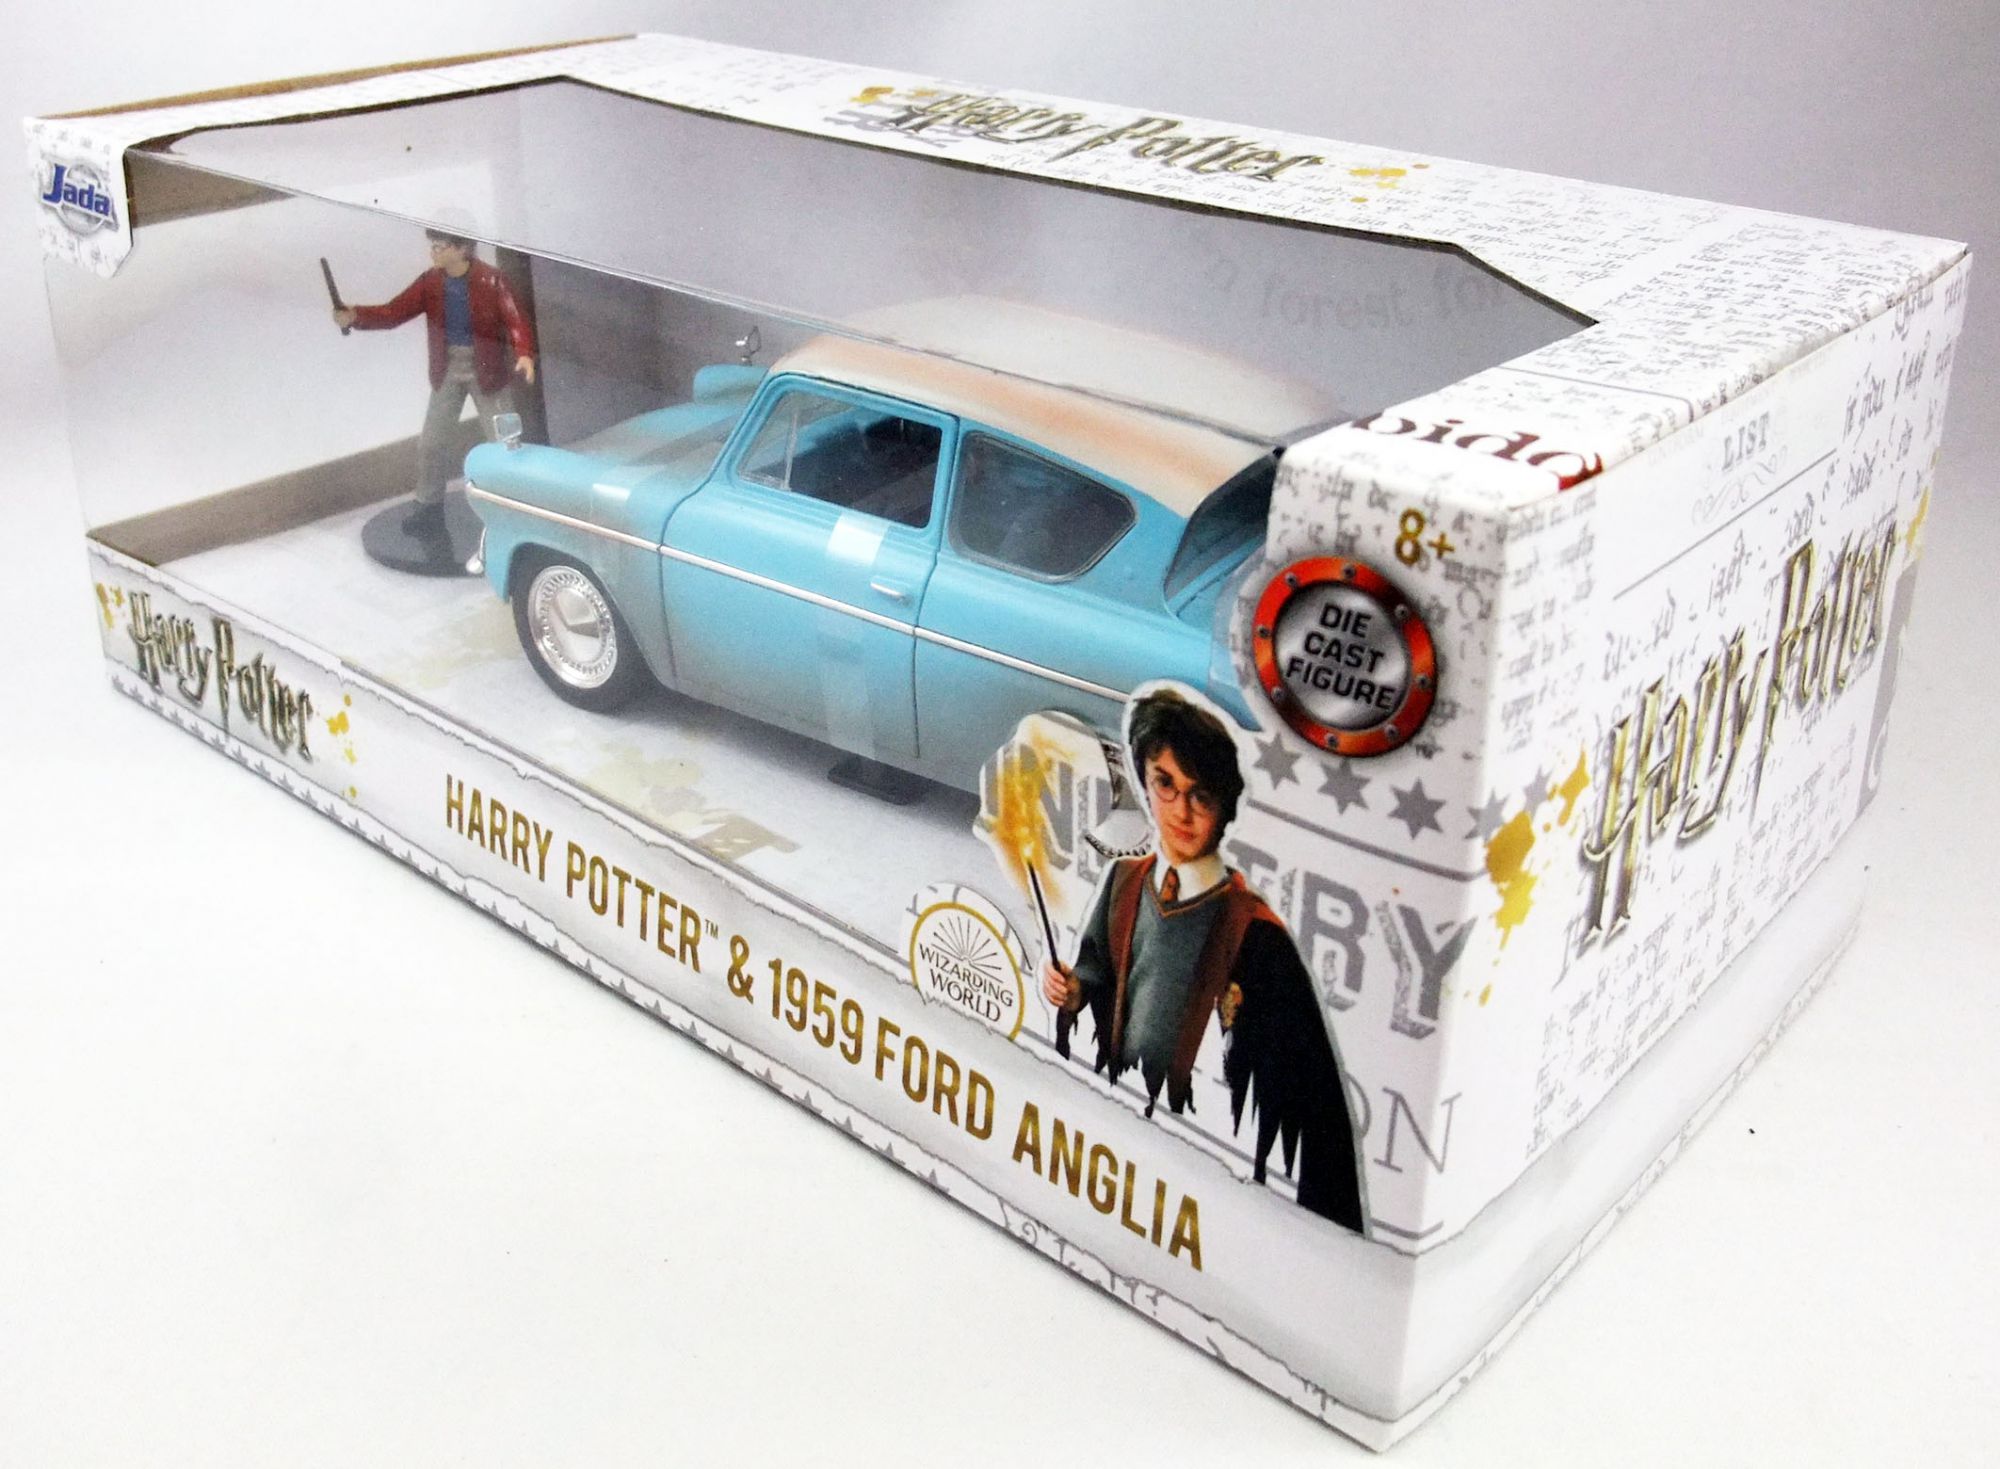 Jada - Harry Potter - Voiture Ford Anglia 1959 - Echelle 1/24ème - 1  figurine HP incluse - 253185000